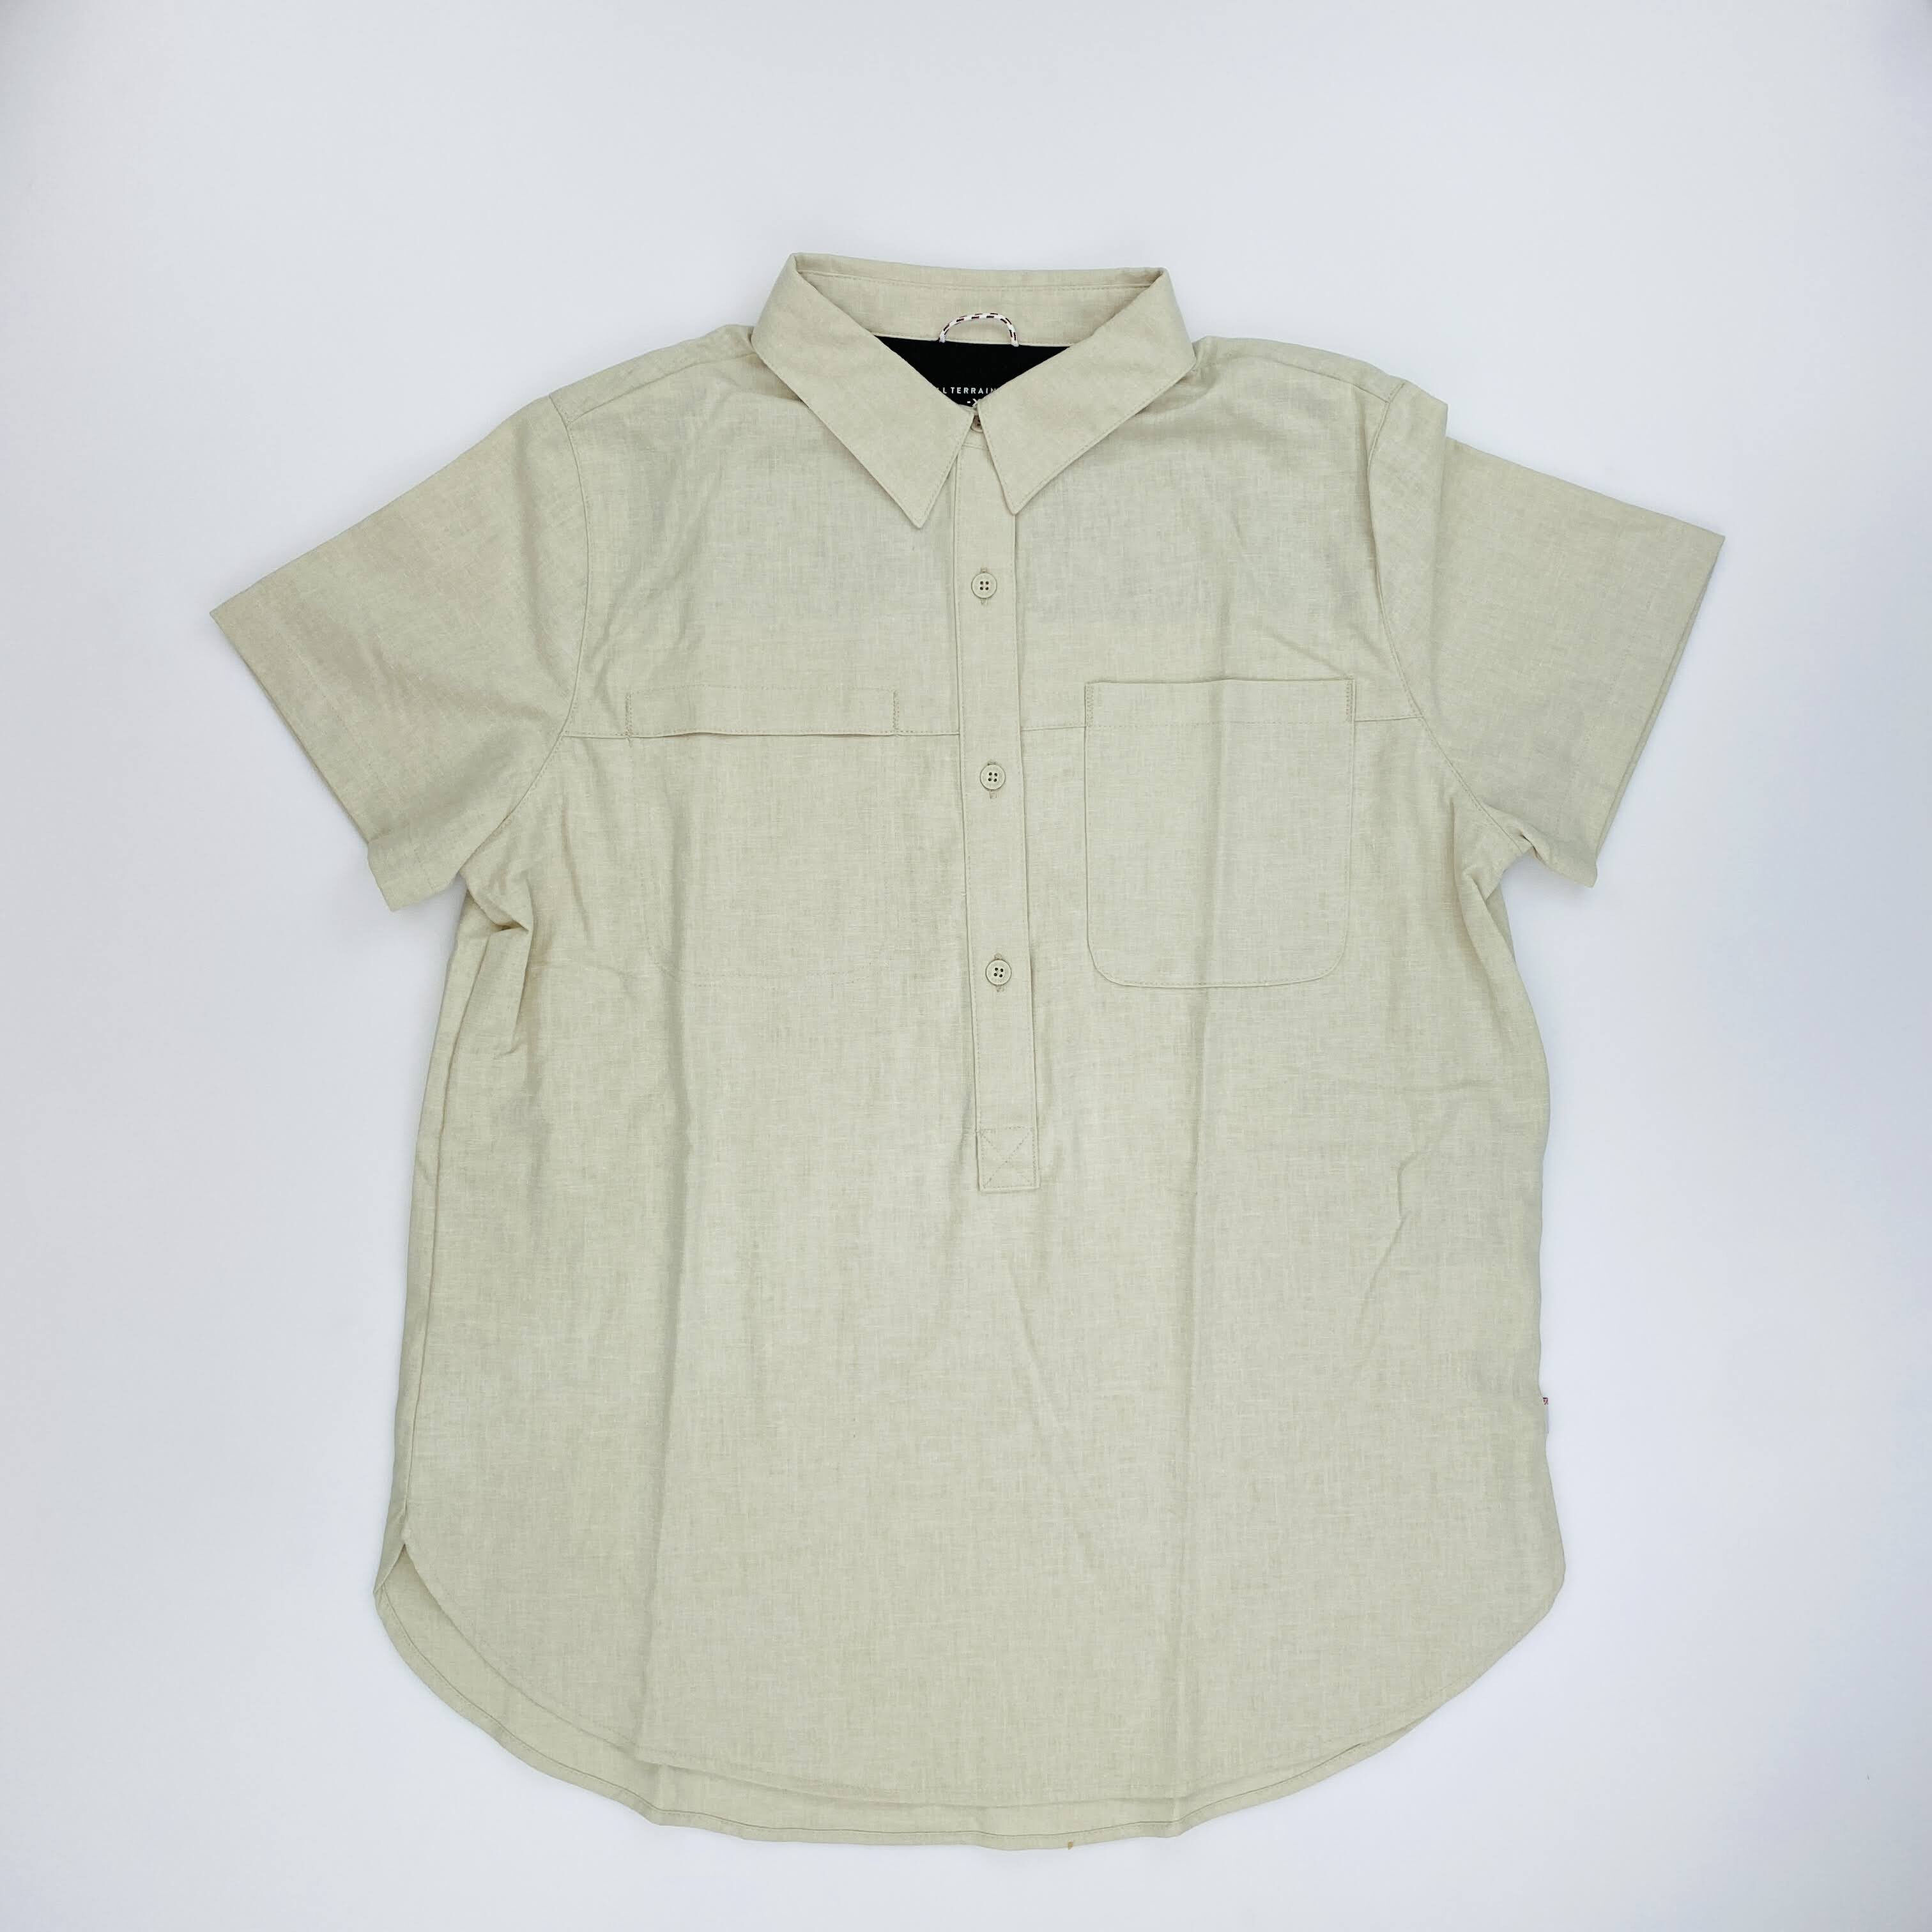 Wrangler Popover Shirt - Felpa con cappuccio di seconda mano - Donna - Beige - S | Hardloop